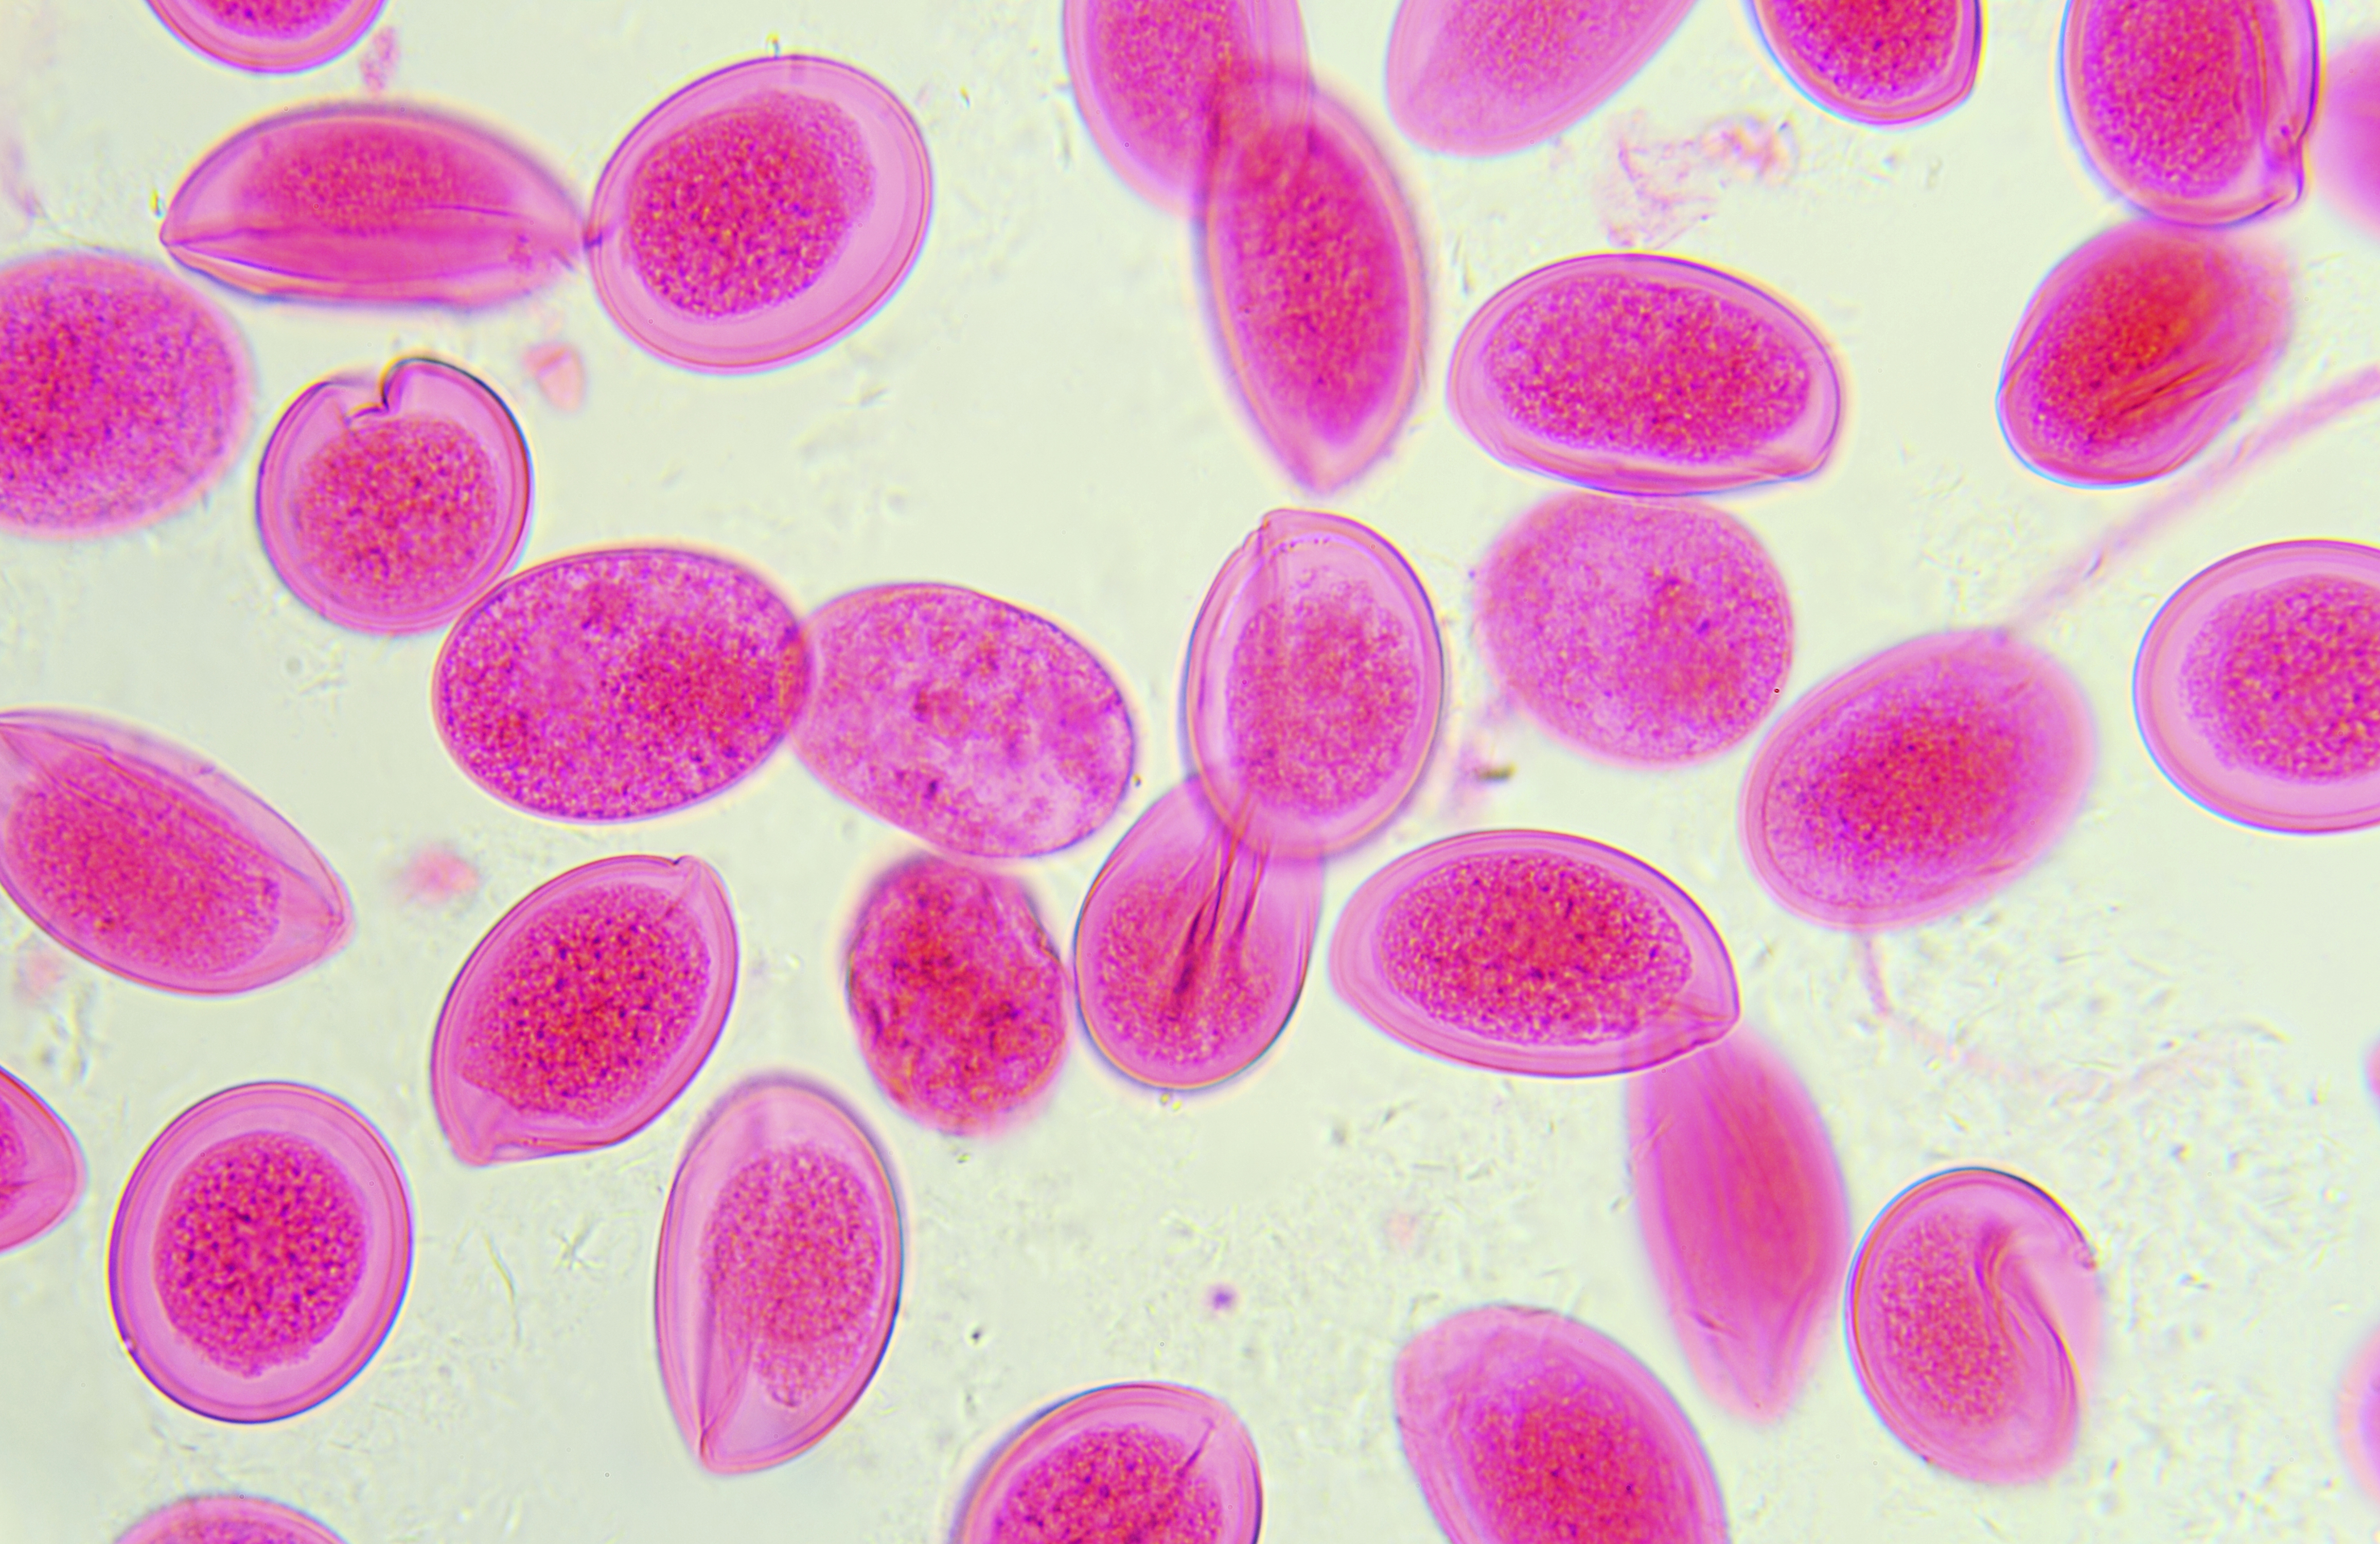 Ascaris Lumbricoides unfertilized eggs under a microscope. (Getty Images)